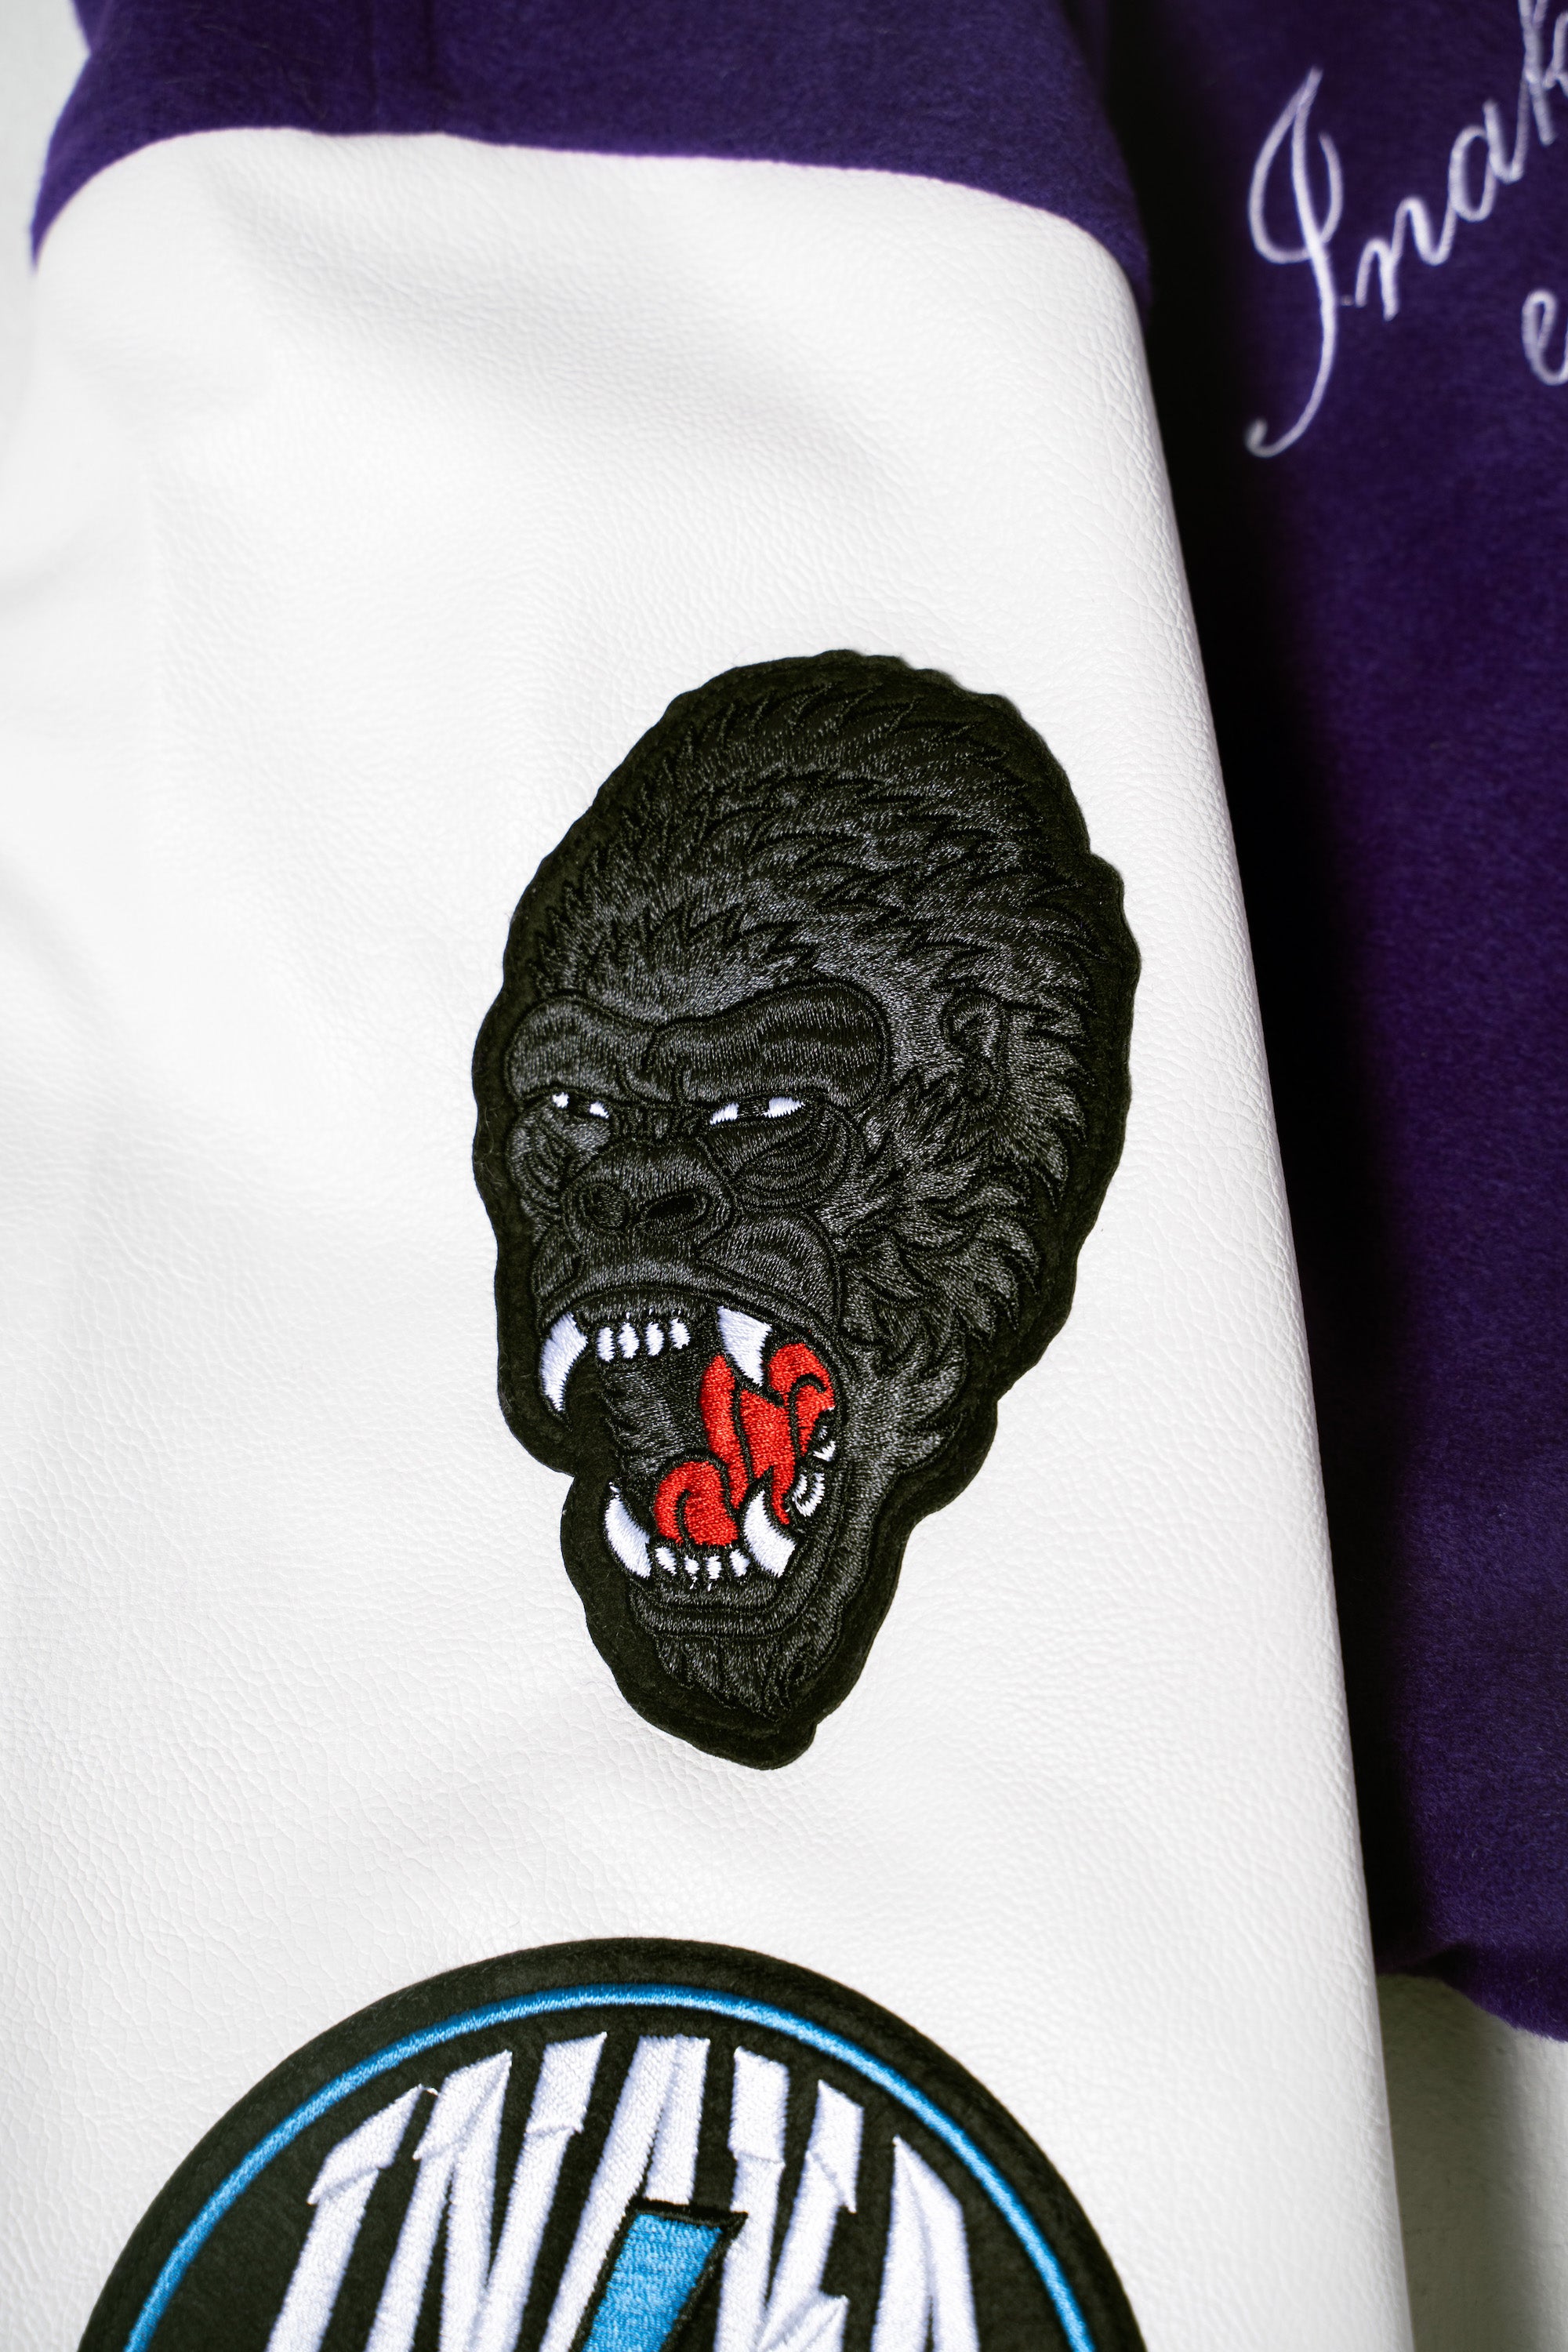 Inaka Power Men's 4 Year Letterman Jacket - Purple/White - L - Oversized Fit Jacket w/ 2 Side Pockets - Faux Leather, Cotton Fleece, Polyester Satin Blend - Inaka Power